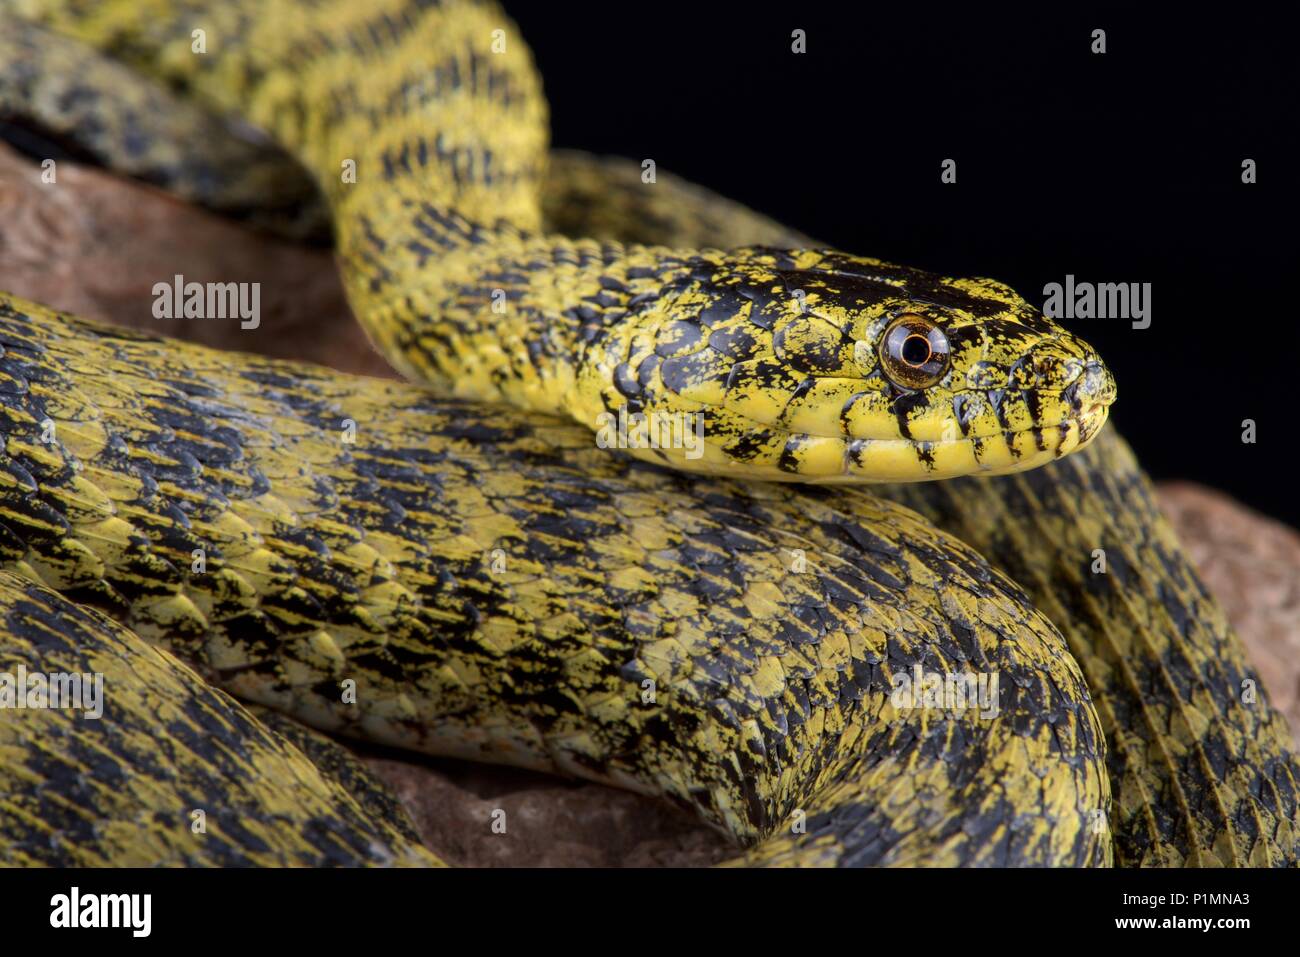 The Zadar dice snake (Natrix tessellatus flavescens) is endemic to the Zadar lake region in Croatia. Classified as non-venomous, they producesa potent Stock Photo